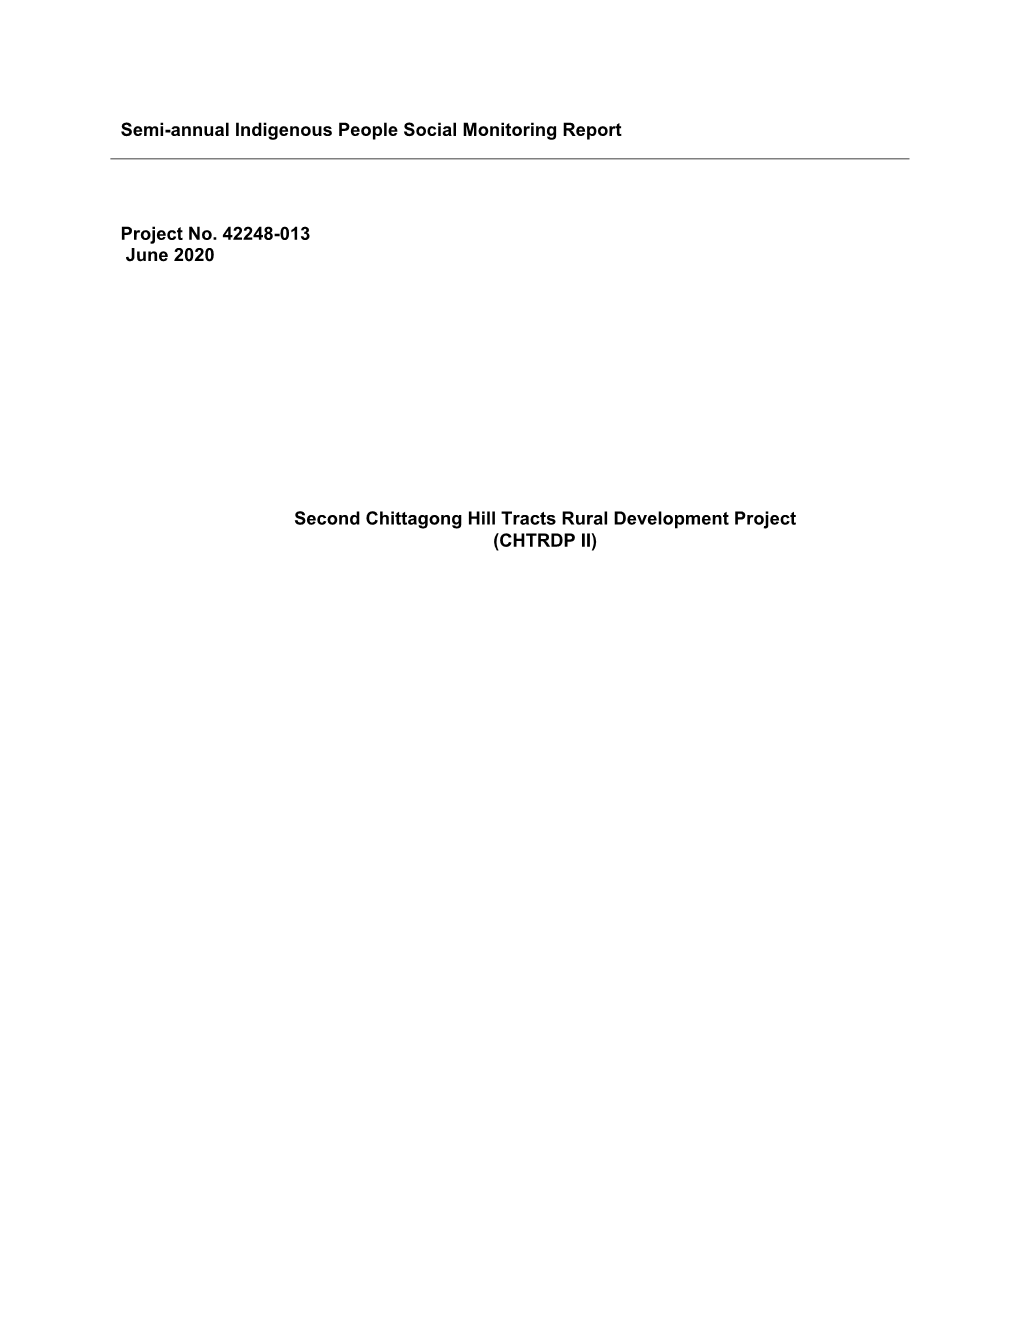 Indigenous Peoples Social Monitoring Report (January-June 2020)